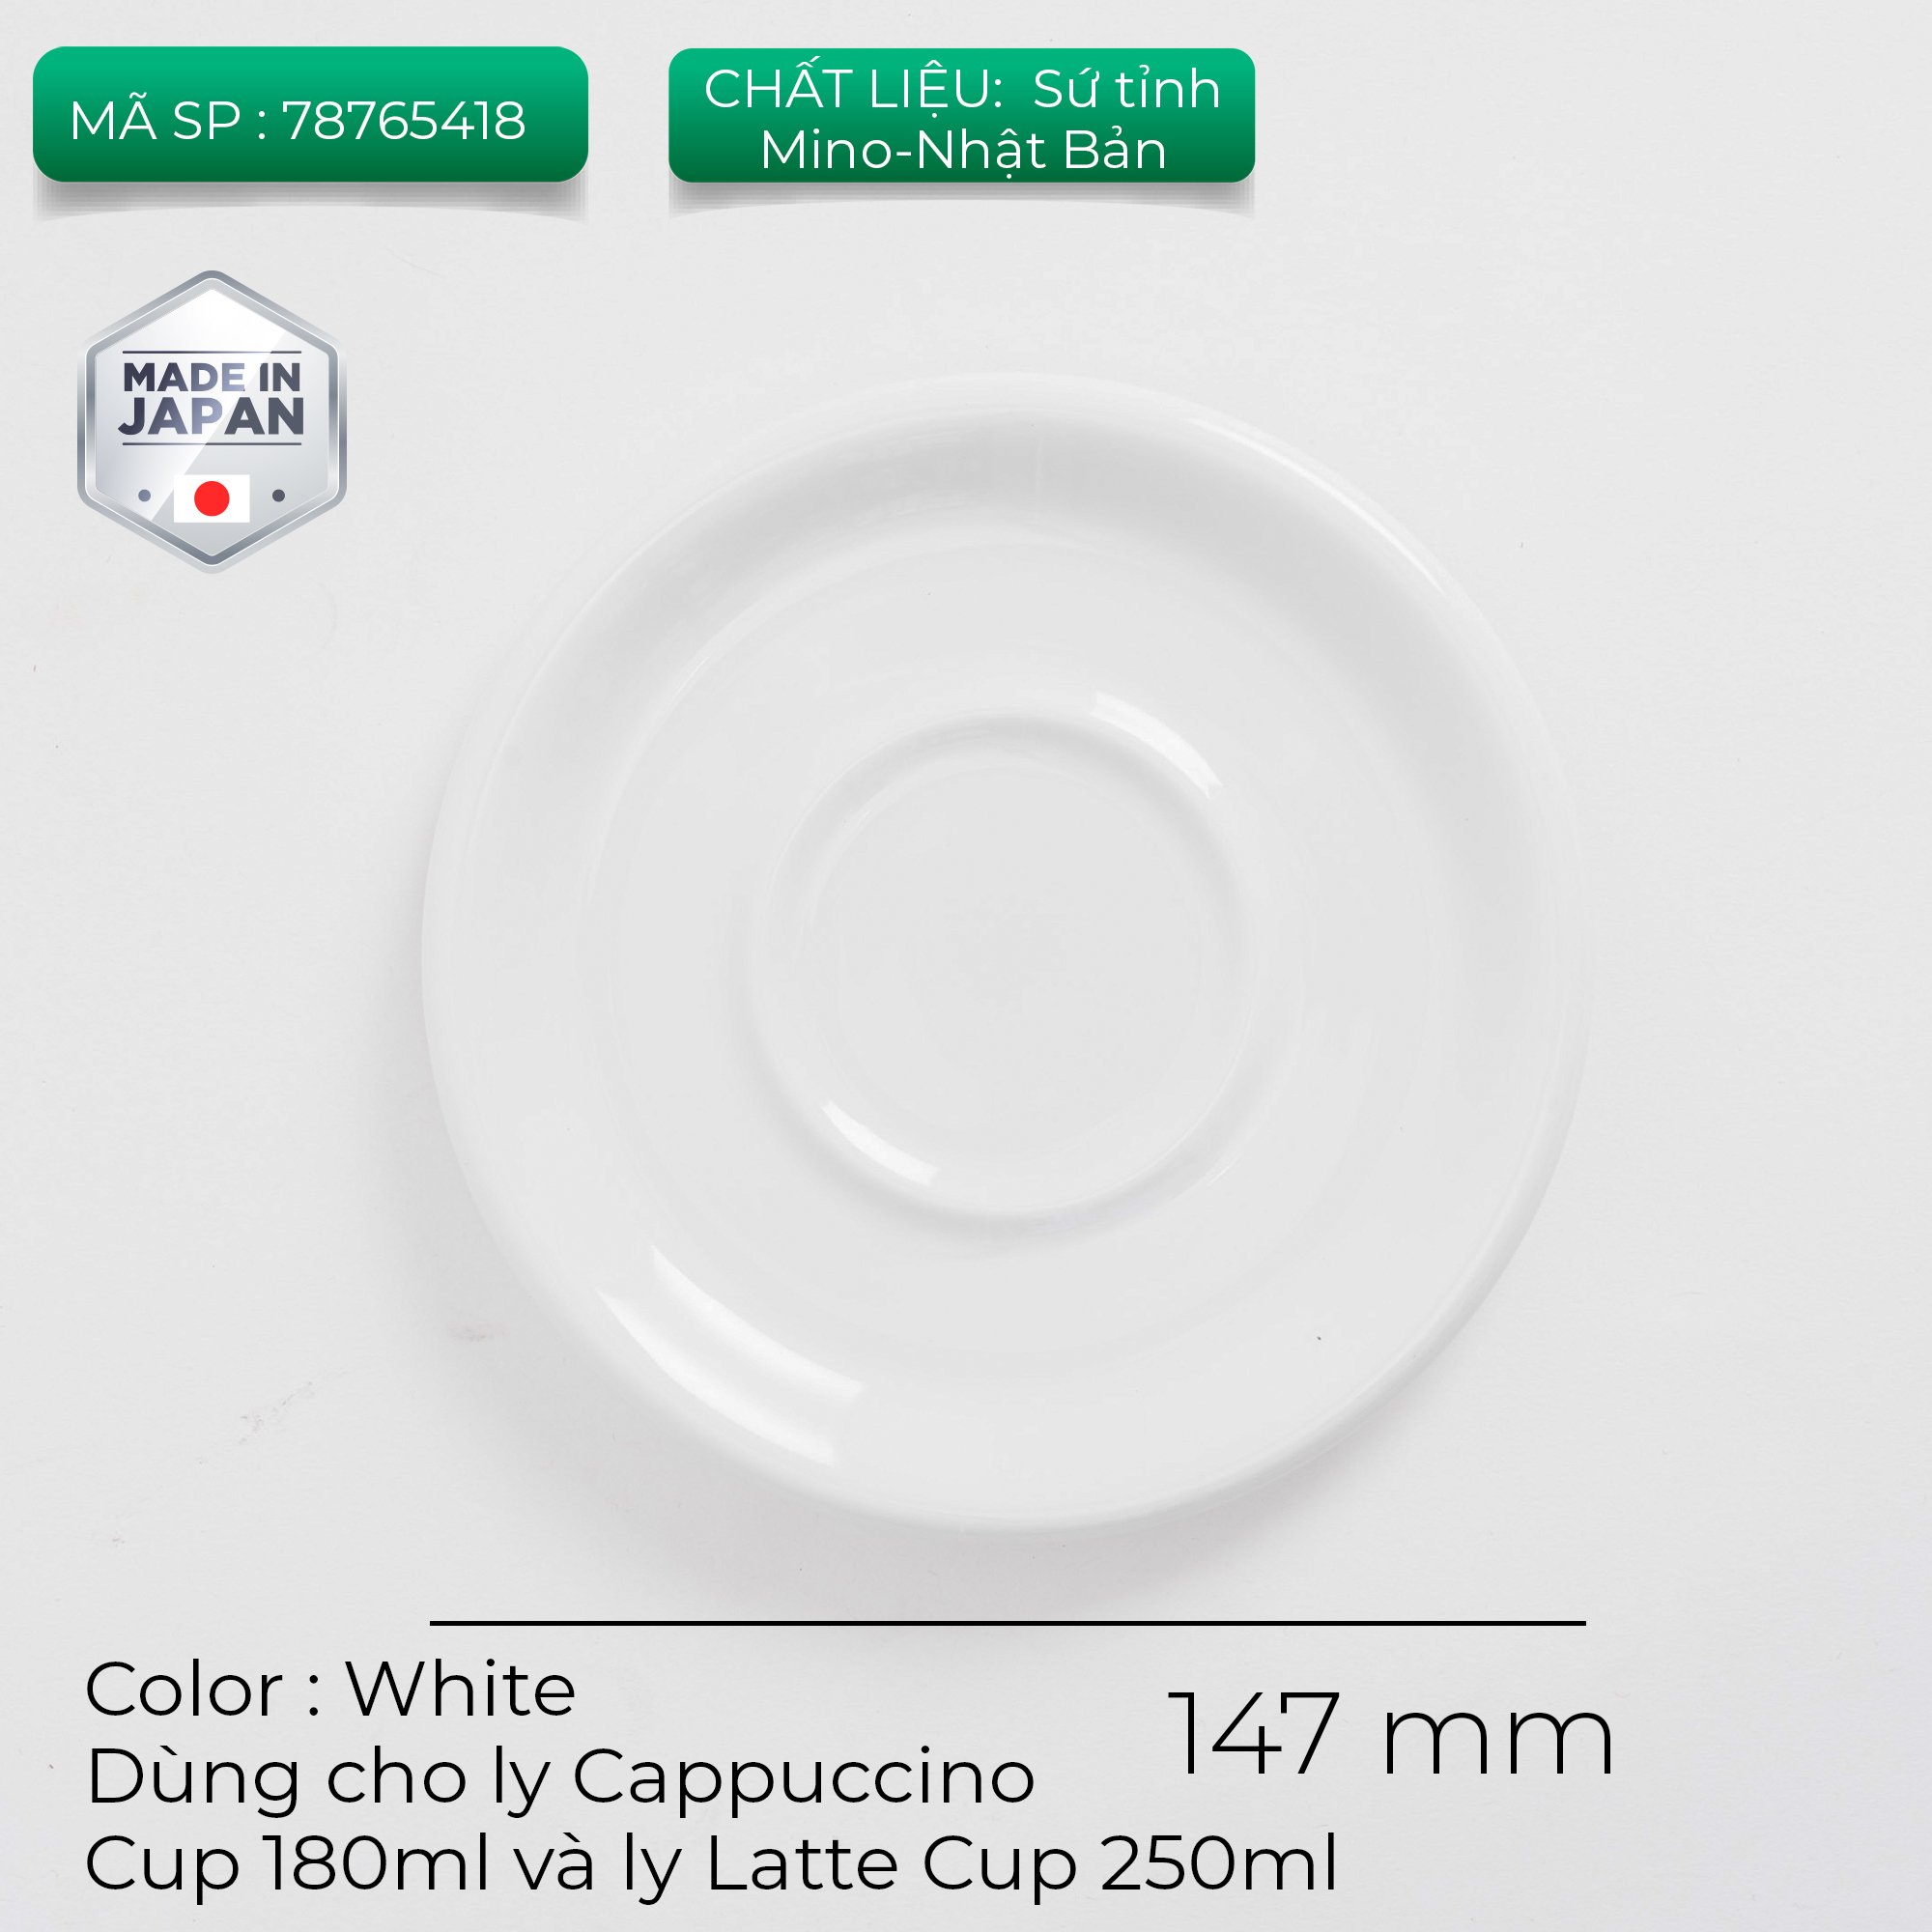 Đĩa sứ Origami Cappuccino Latte Saucer 147mm